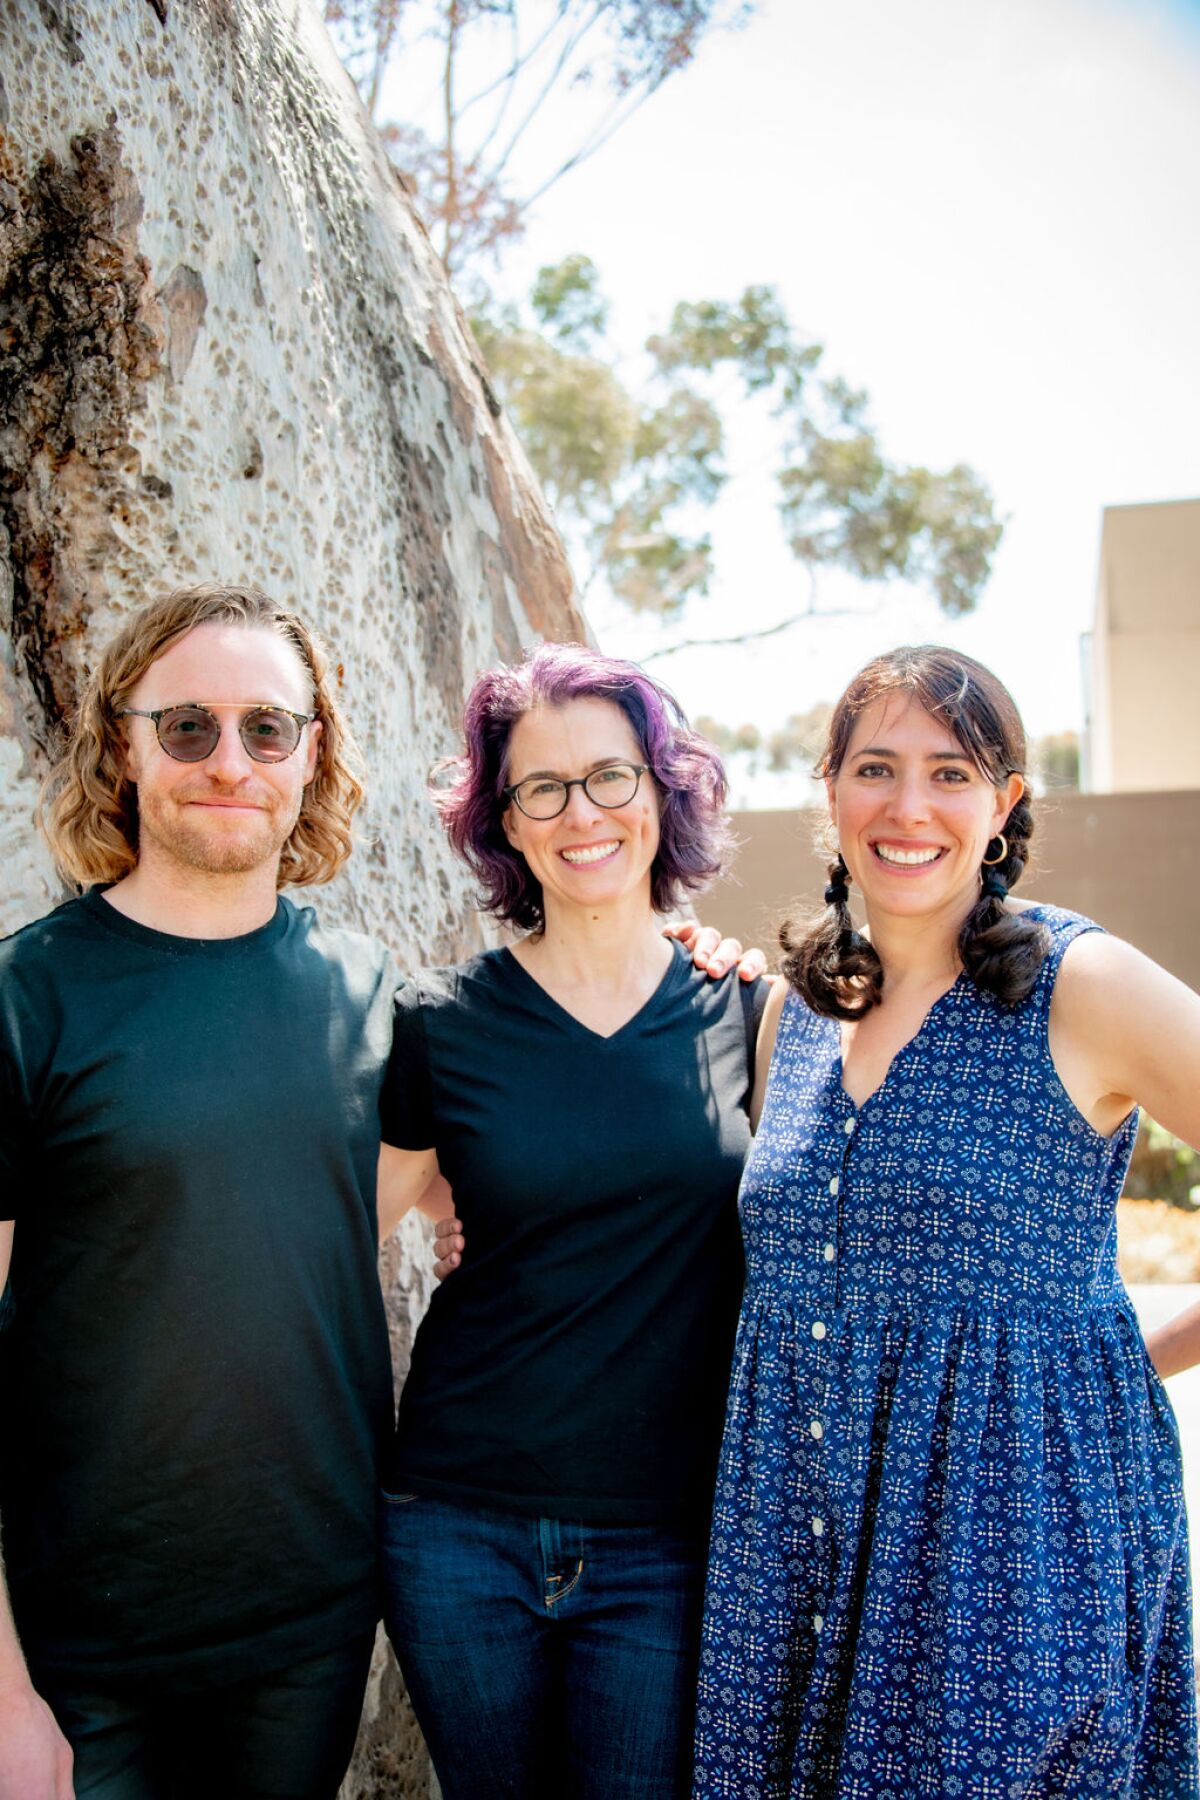 The "Lempicka" creative team of Matt Gould, left, Carson Kreitzer and Rachel Chavkin at La Jolla Playhouse.